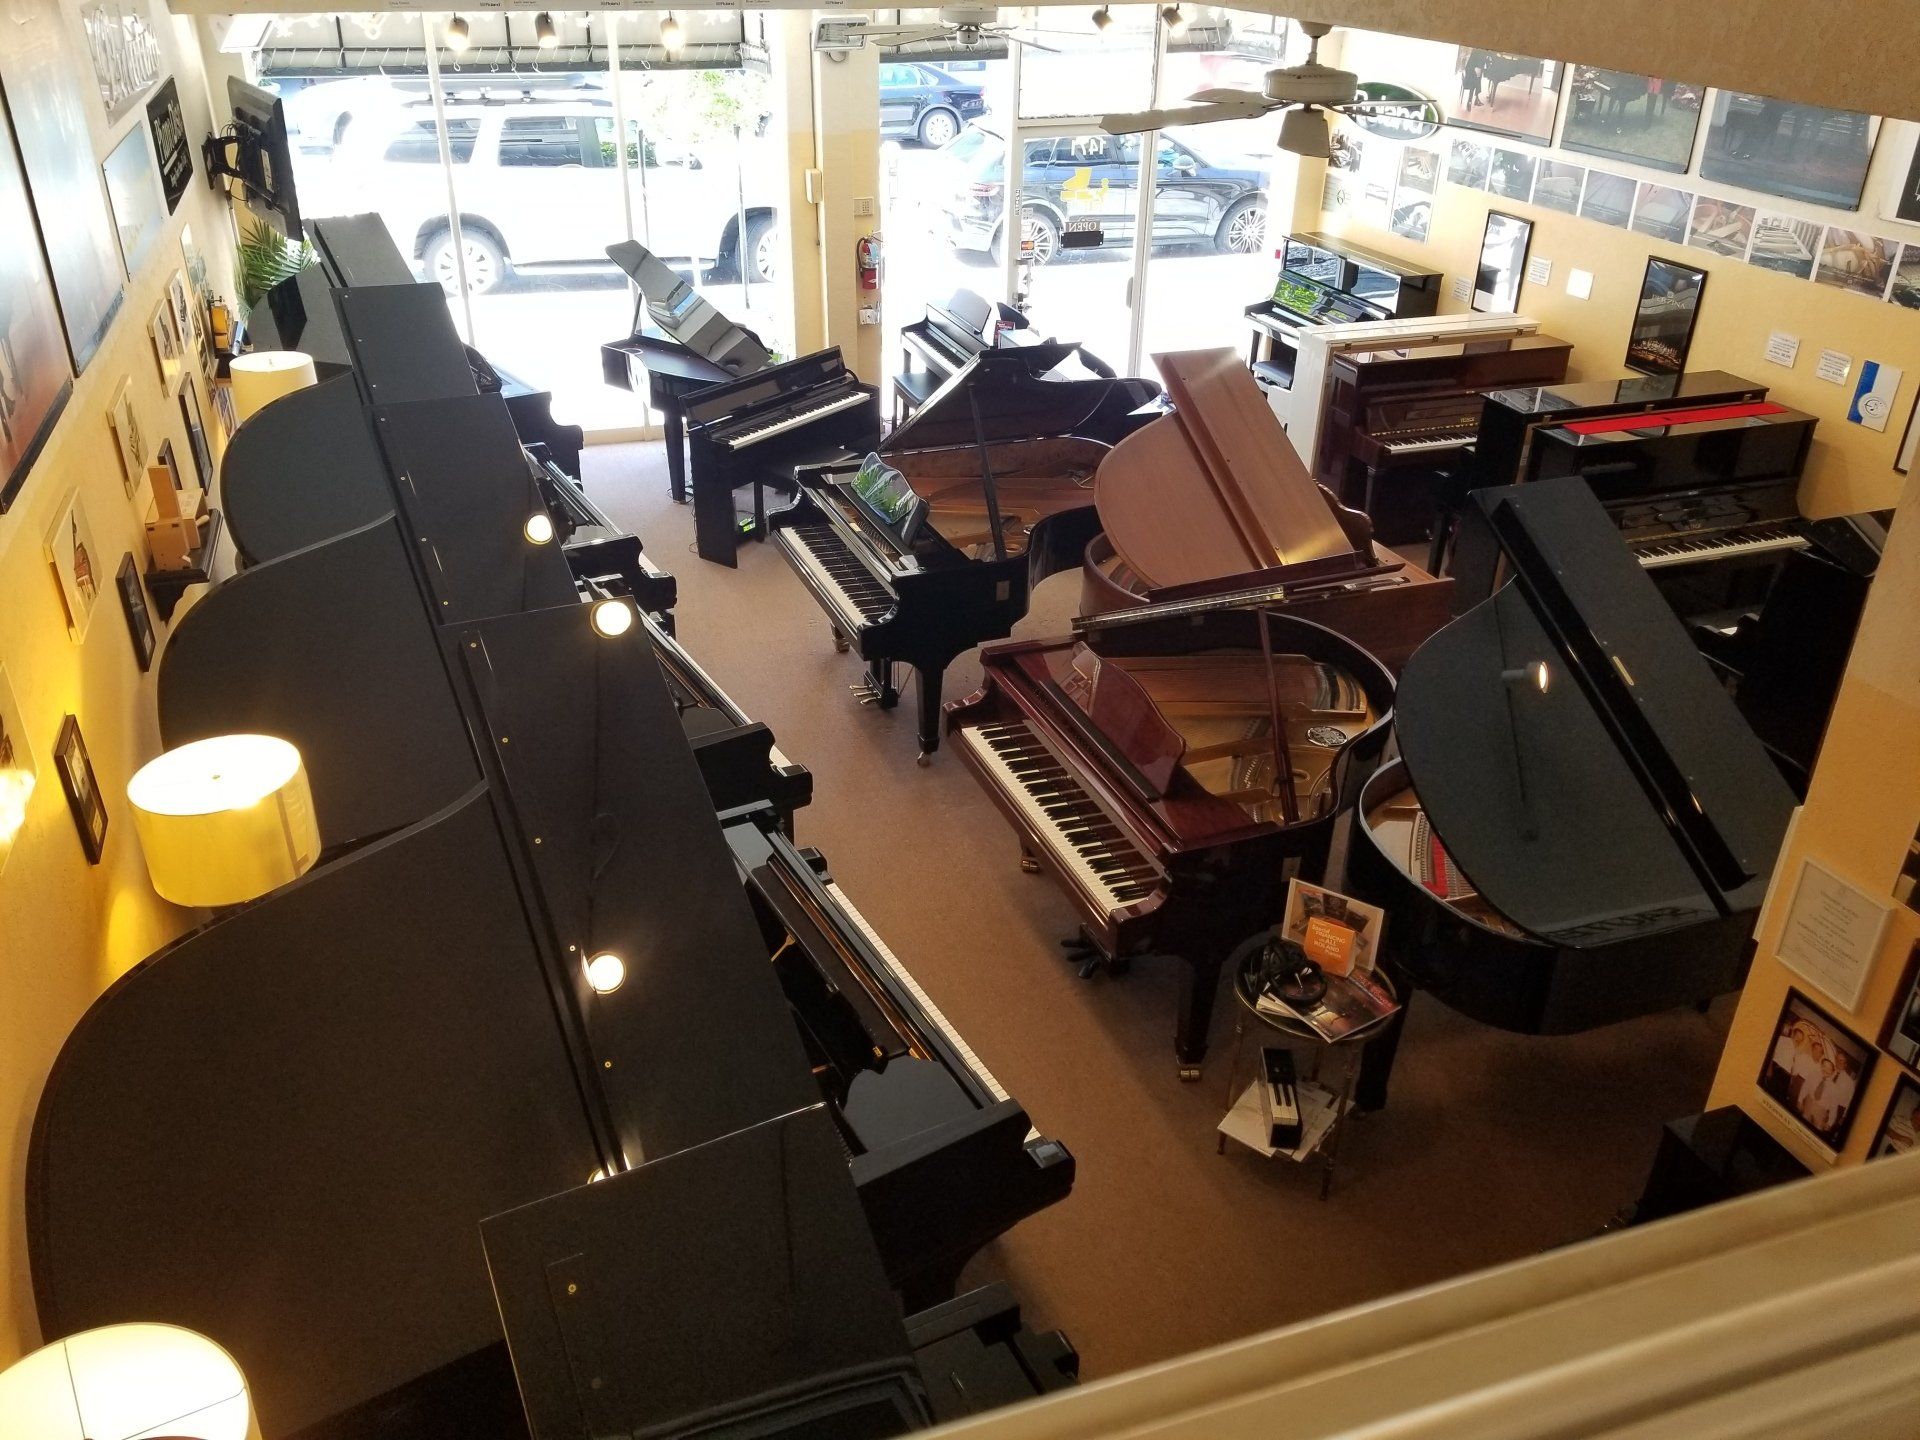 World Class Pianos piano store Burlingame